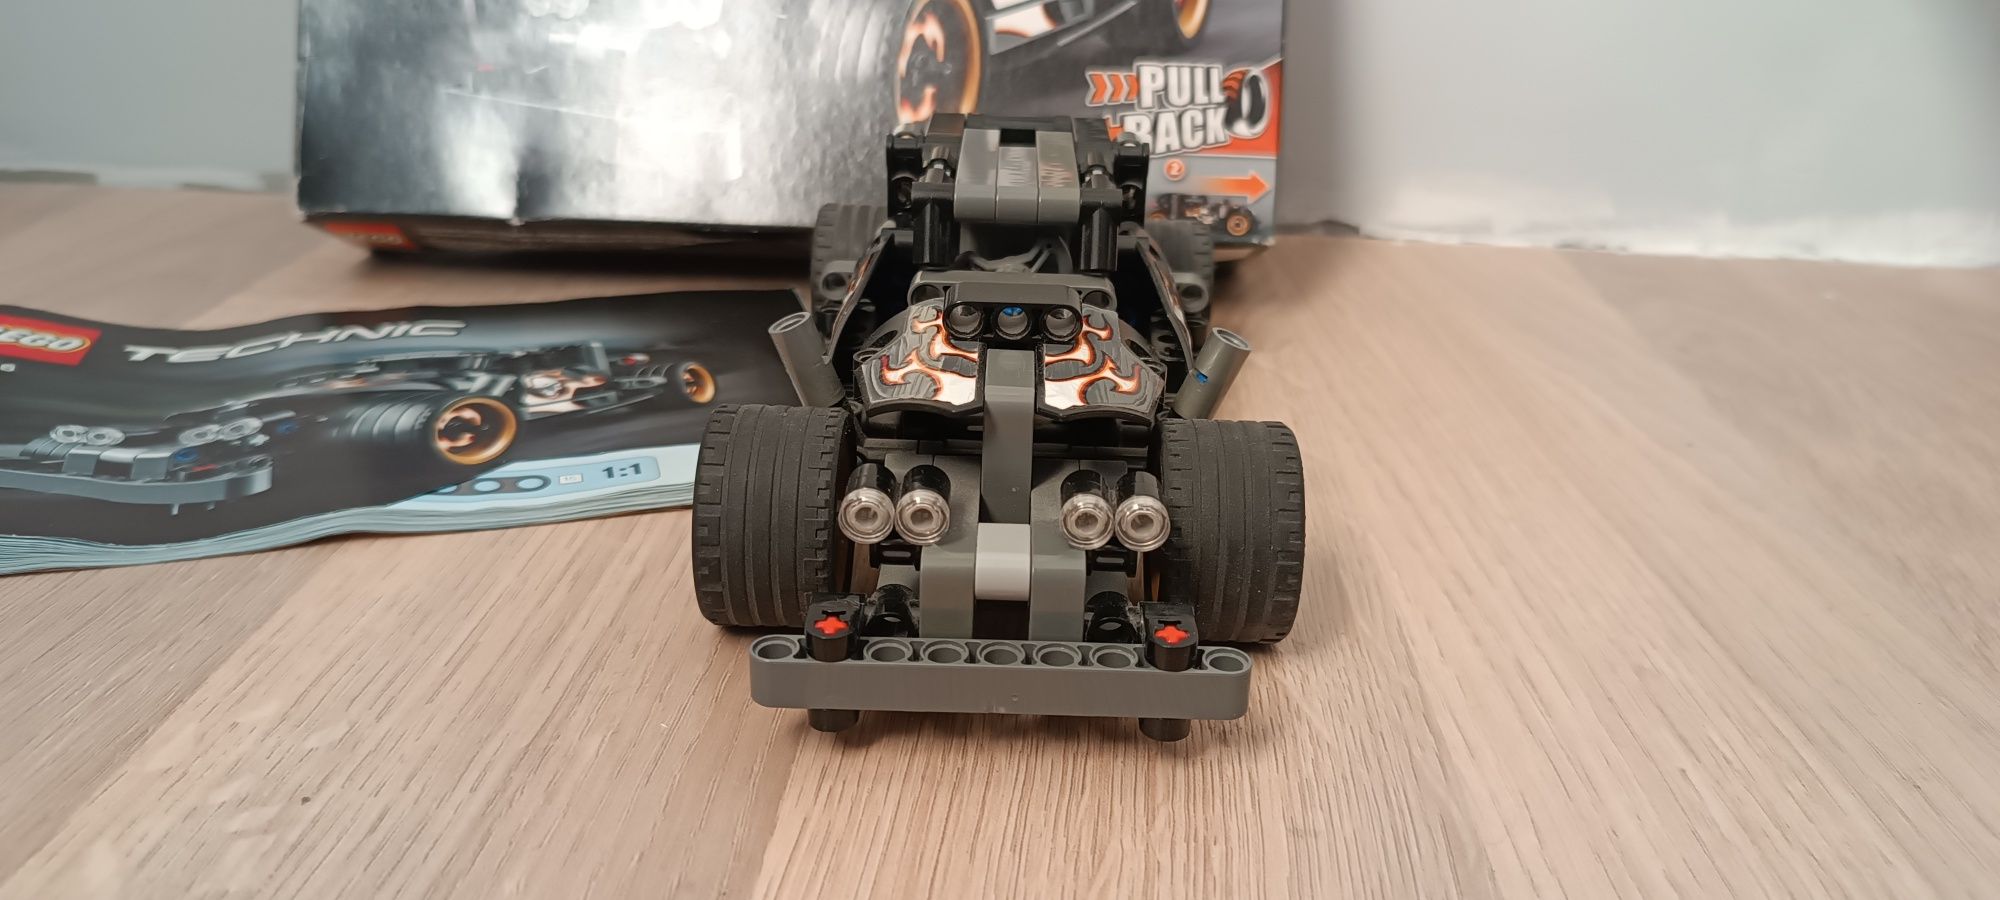 Lego Technic 42046